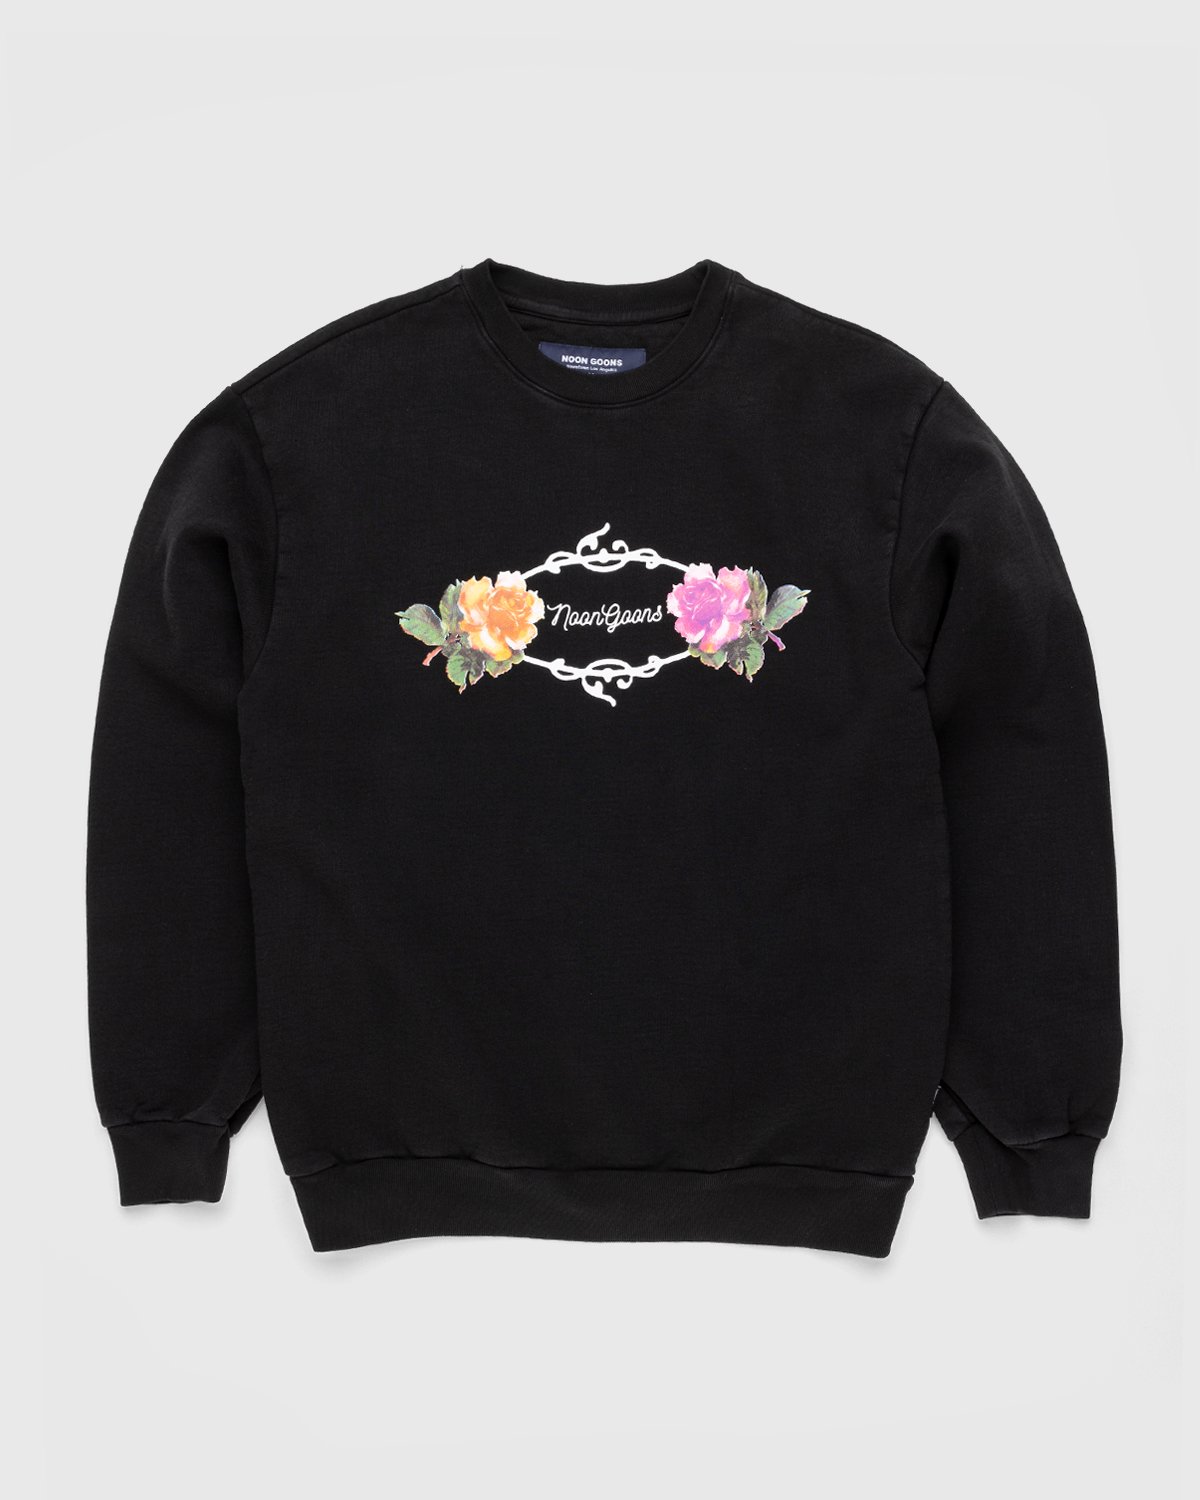 Noon Goons - Garden Sweatshirt Black - Clothing - Black - Image 1